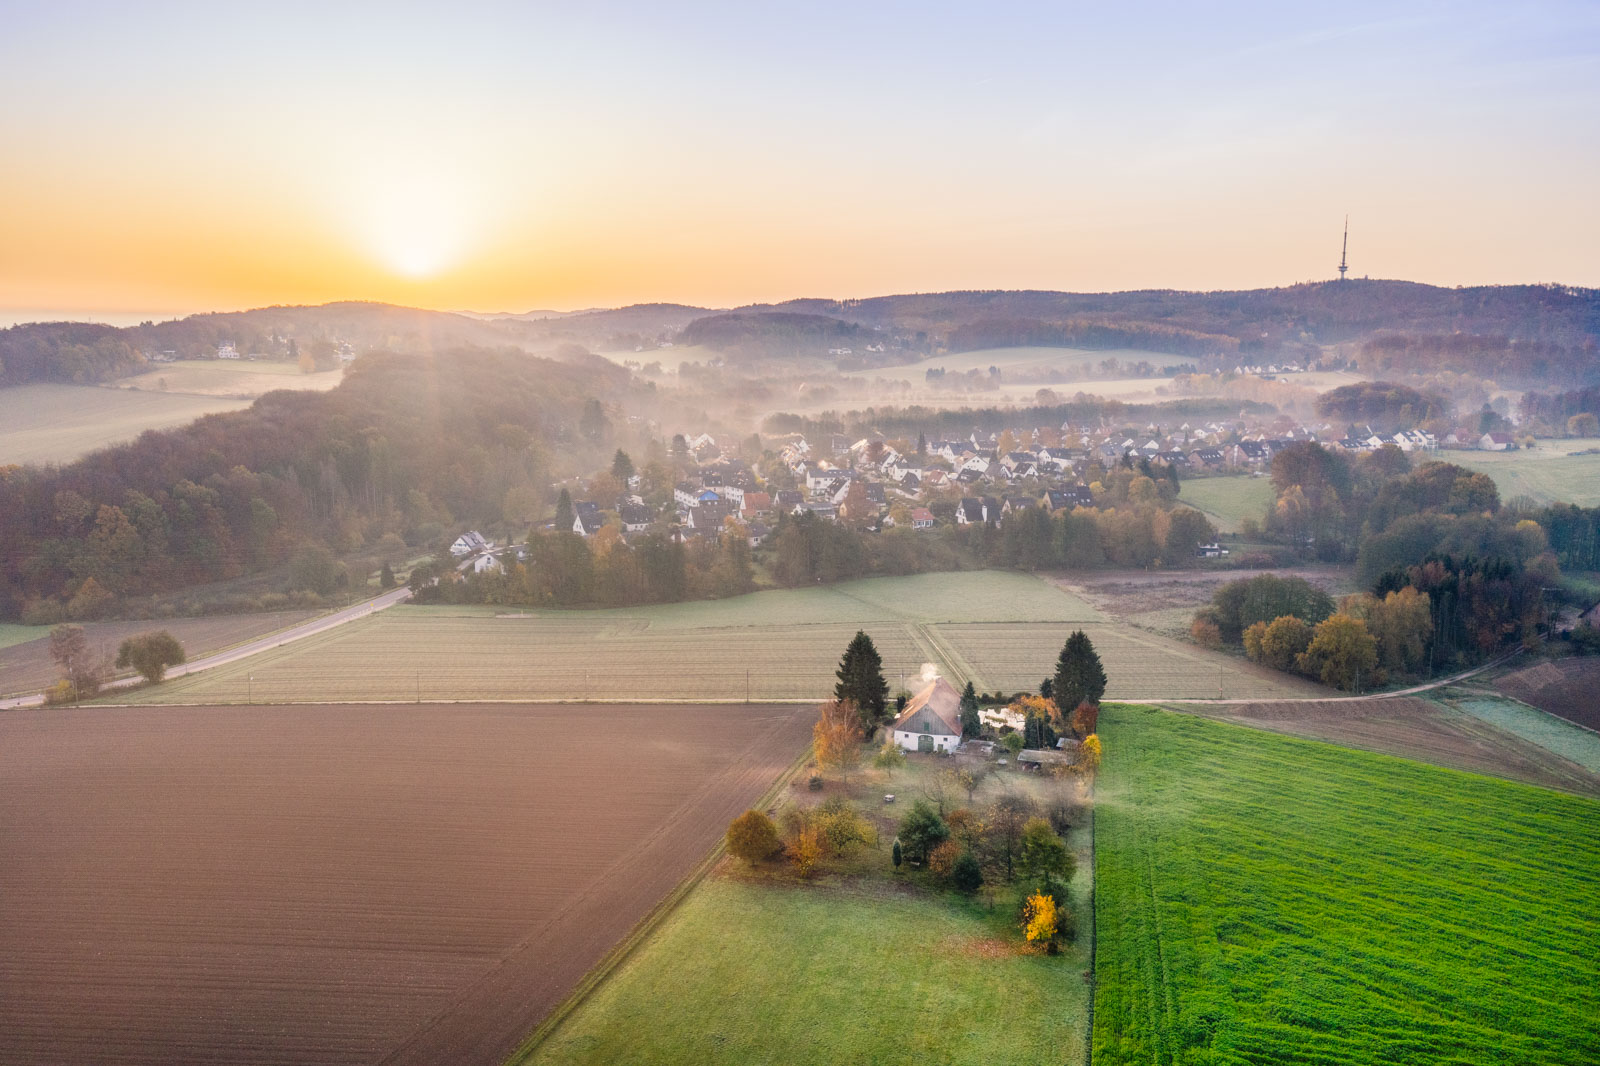 Landscape at sunrise in November 2020 (Bielefeld-Hoberge, Germany).